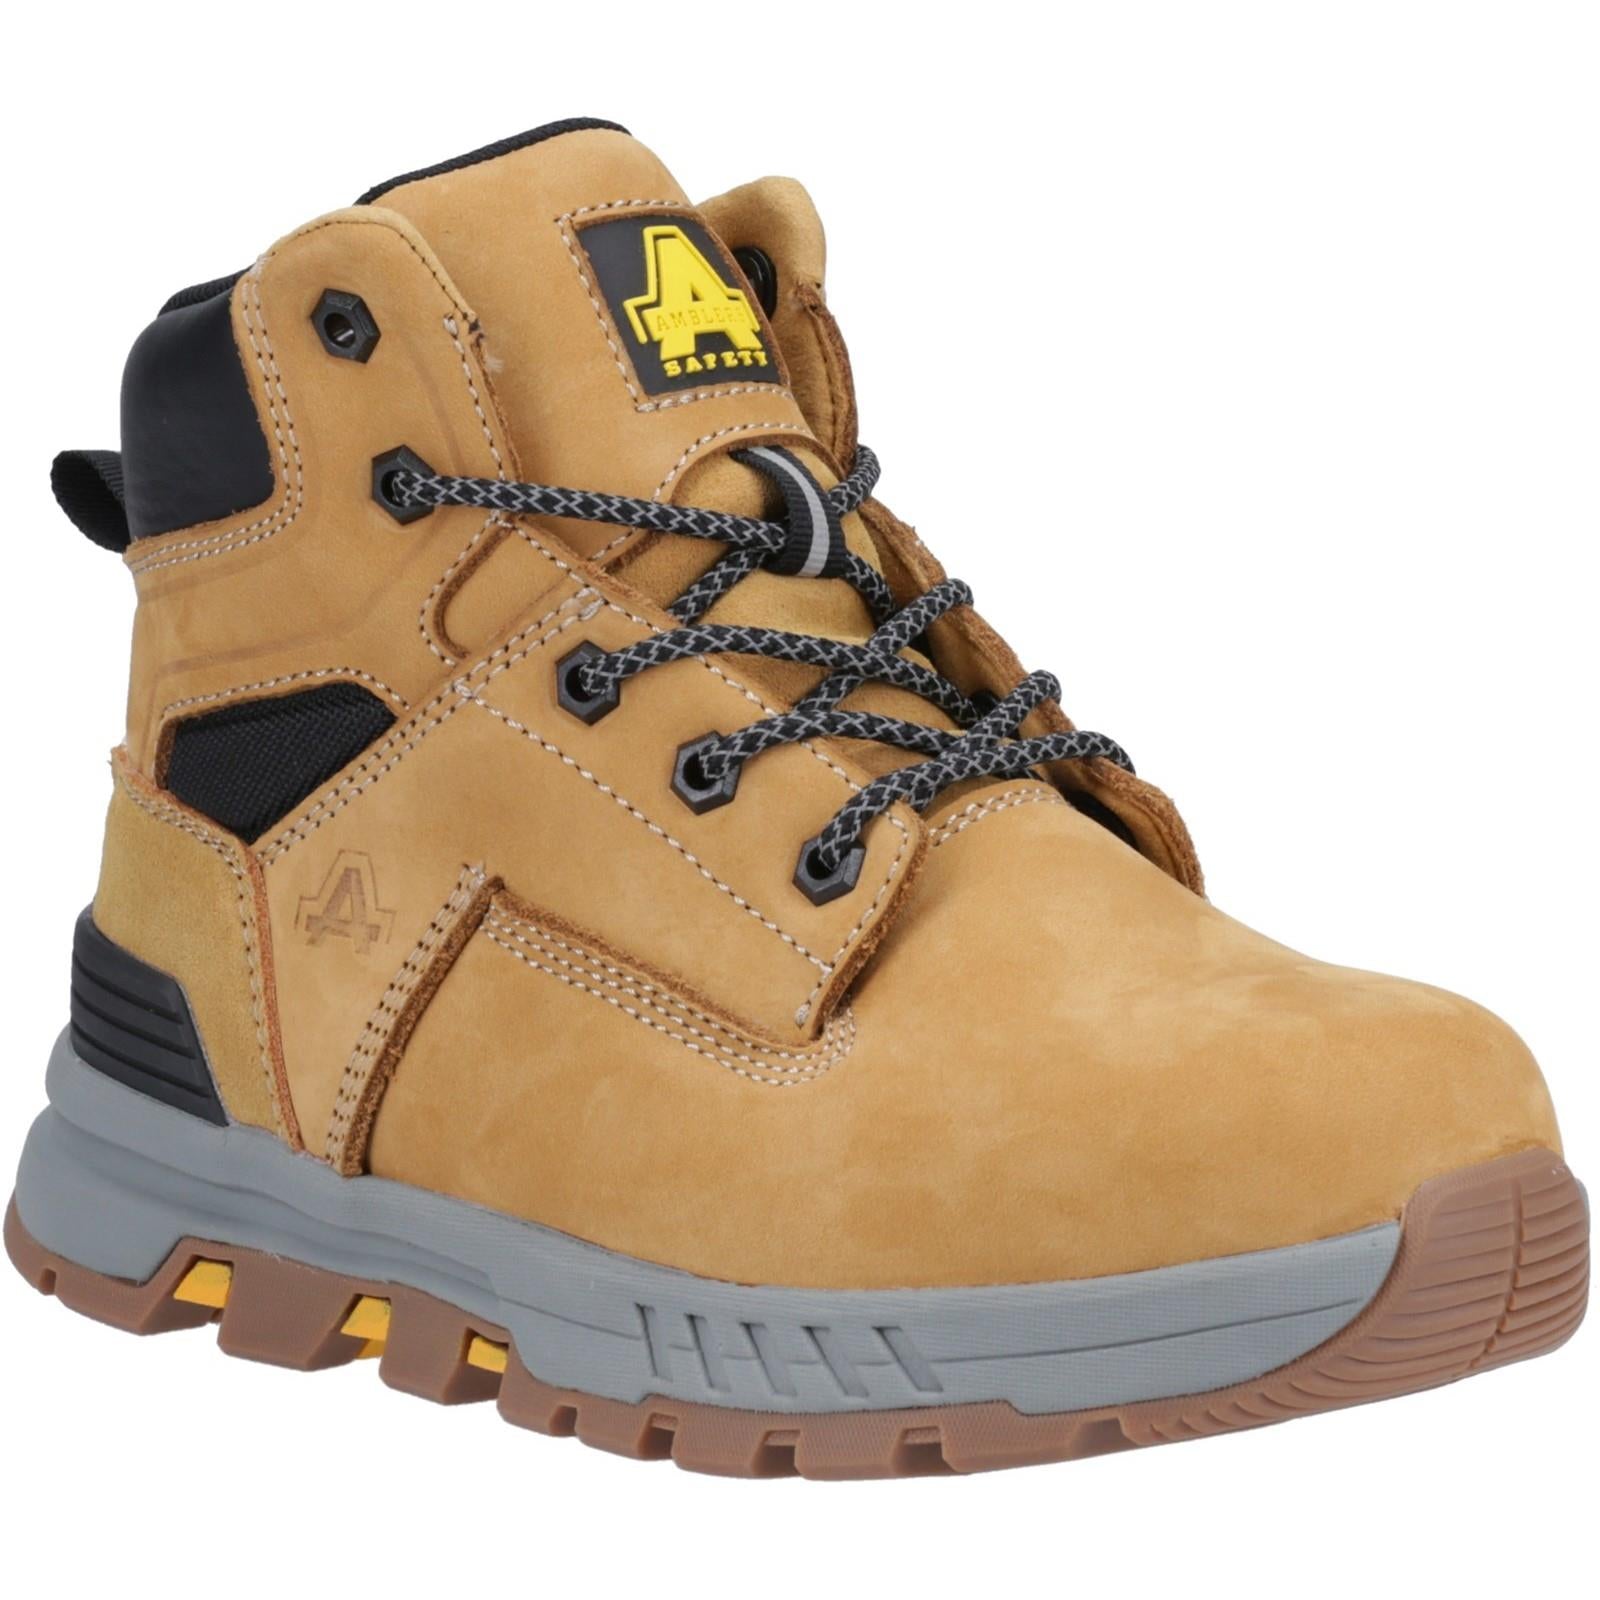 Amblers Elena S3 ladies honey steel toe water resistant work safety boots #AS613